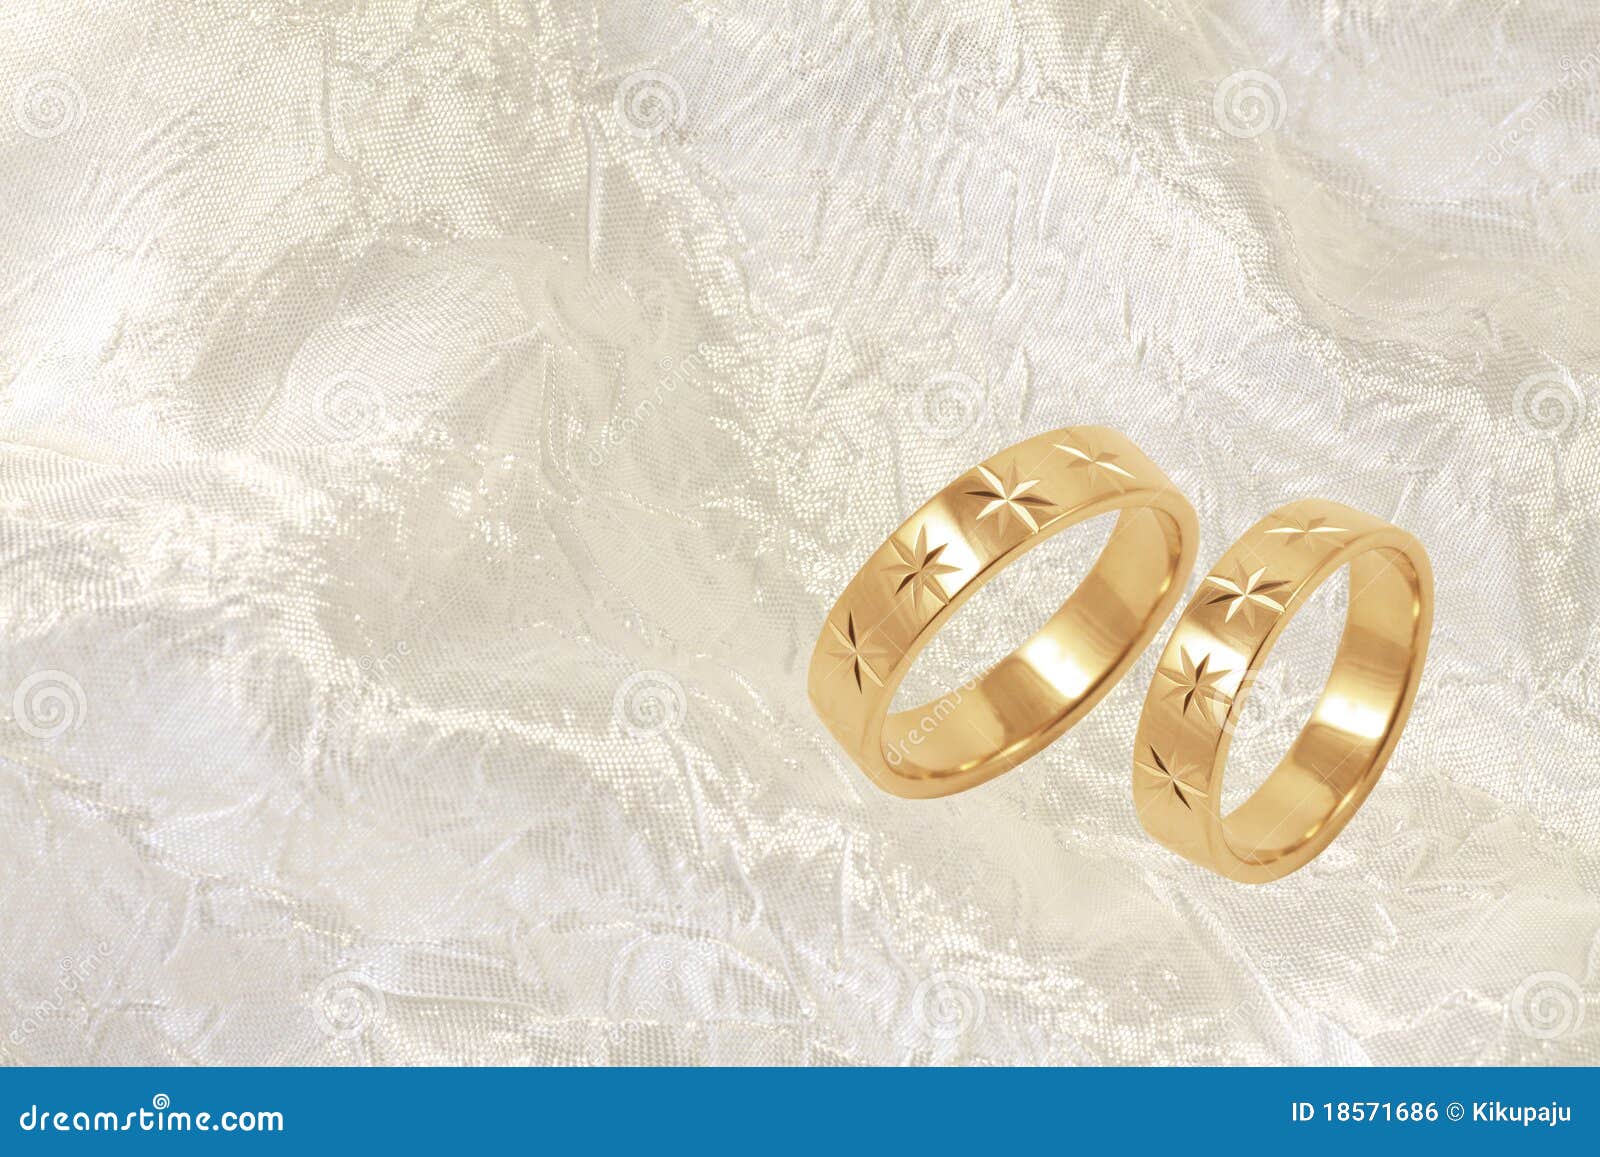  Gold  Wedding  Rings  On White  Festive Background  Royalty 